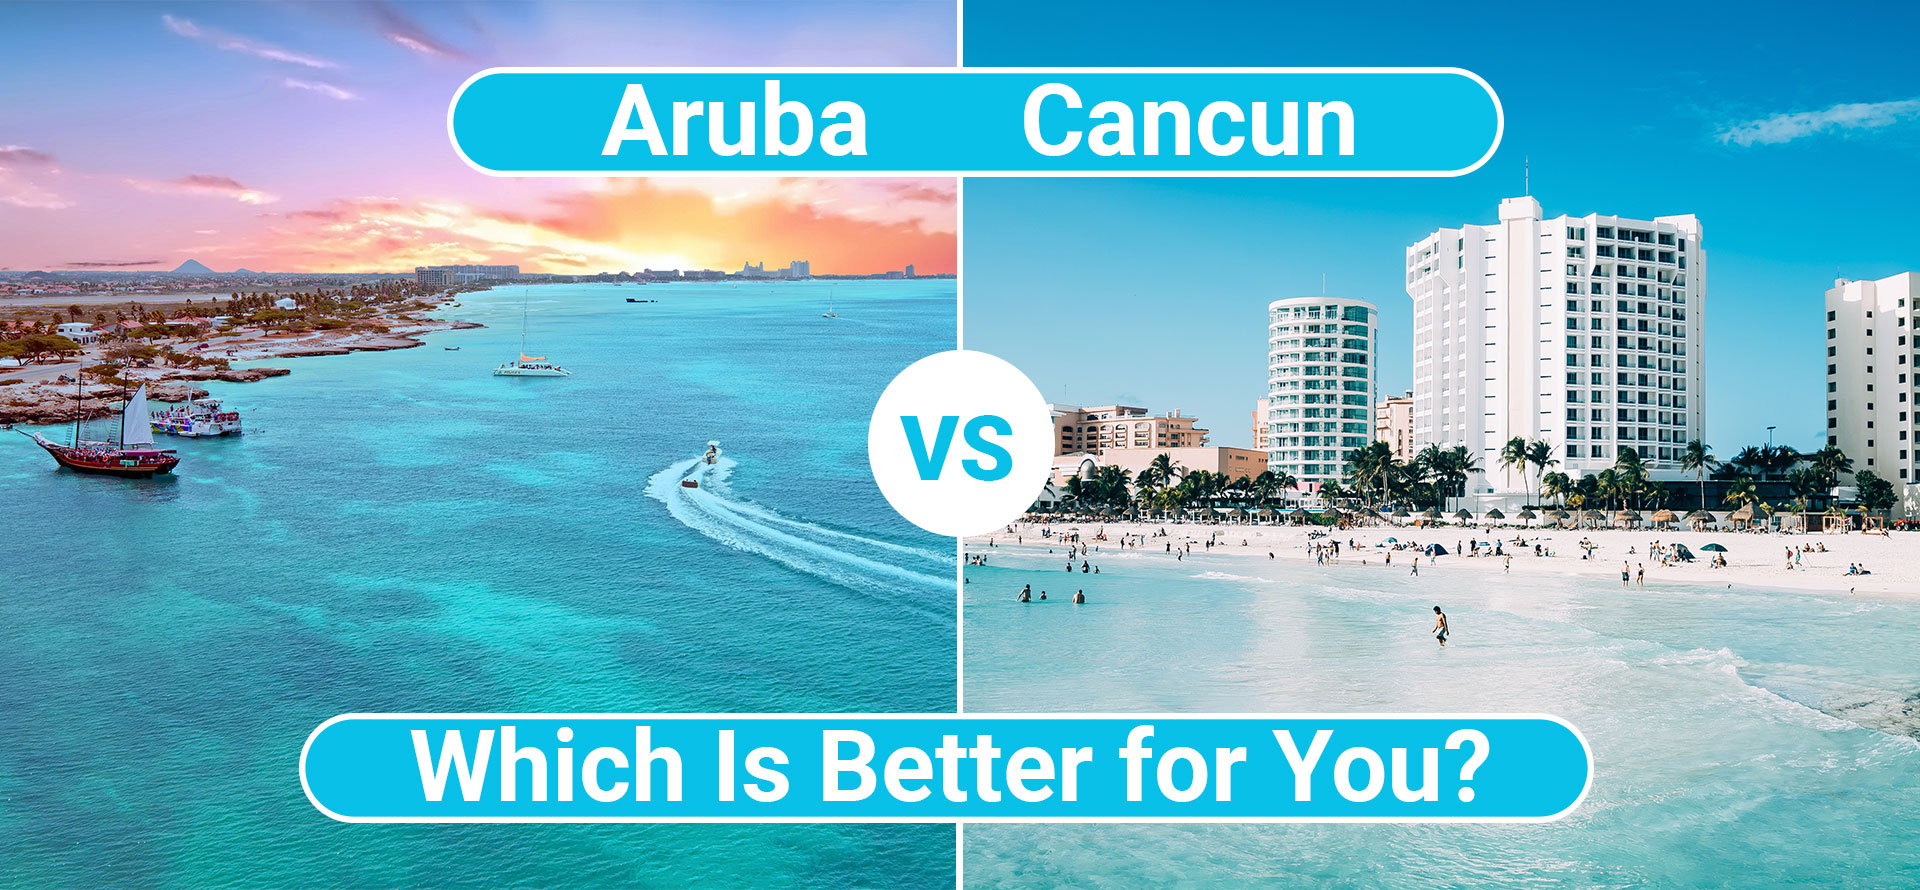 Aruba vs cancun.